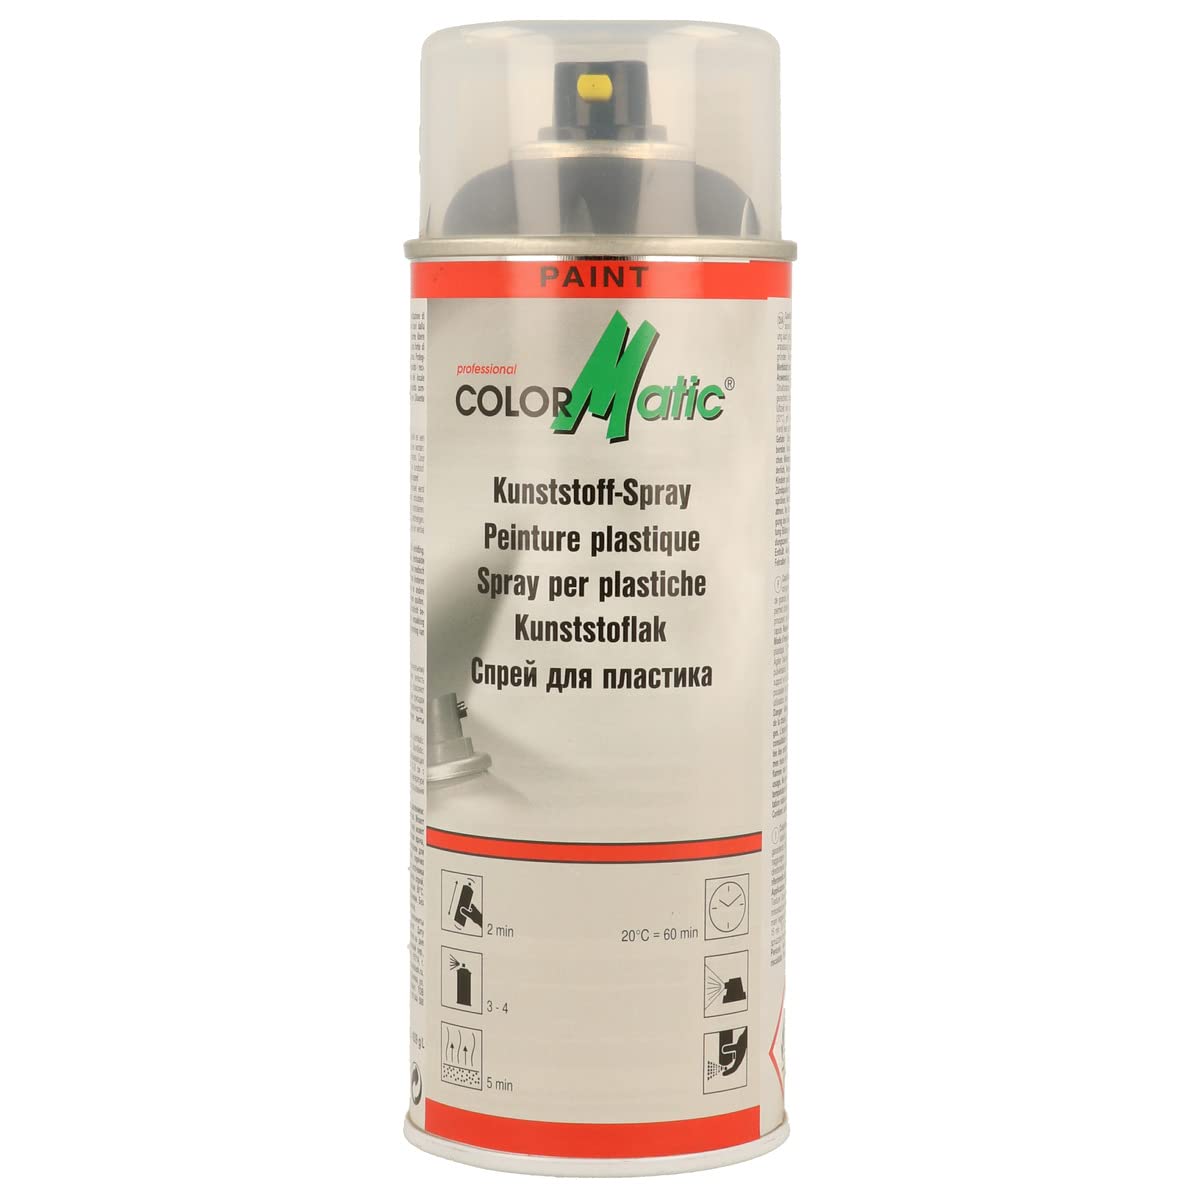 ColorMatic 882418 Kunststoff-Spray anthrazit seidenmatt 400 ml von COLORMATIC